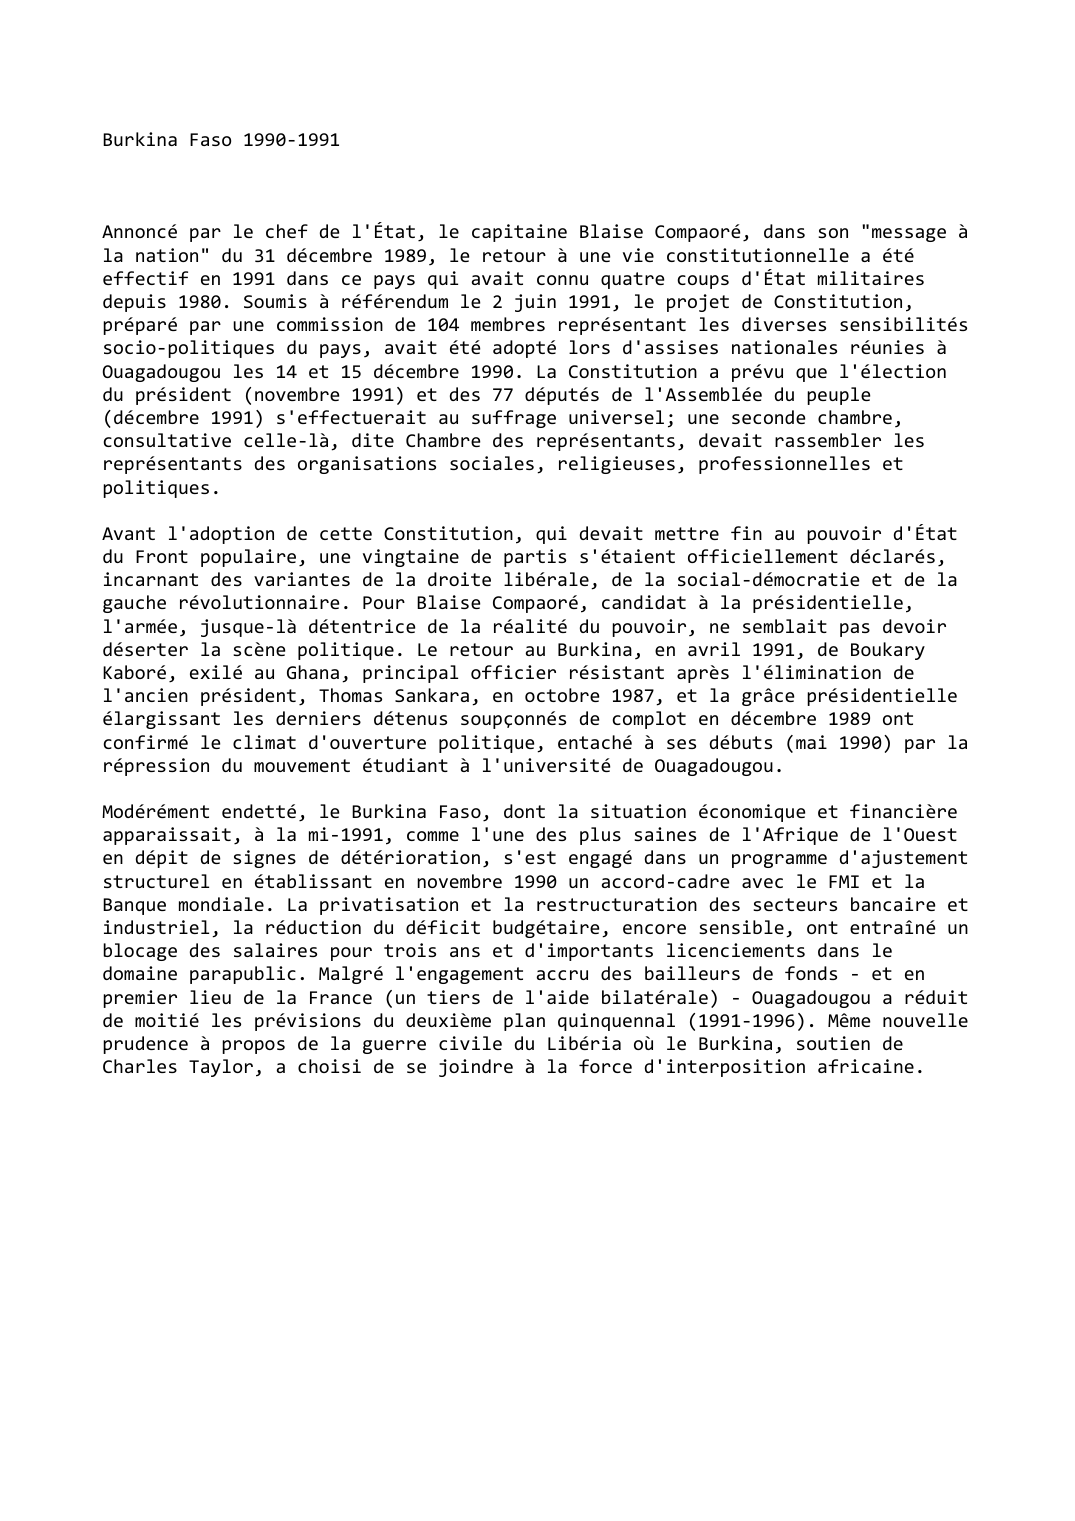 Prévisualisation du document Burkina Faso (1990-1991)